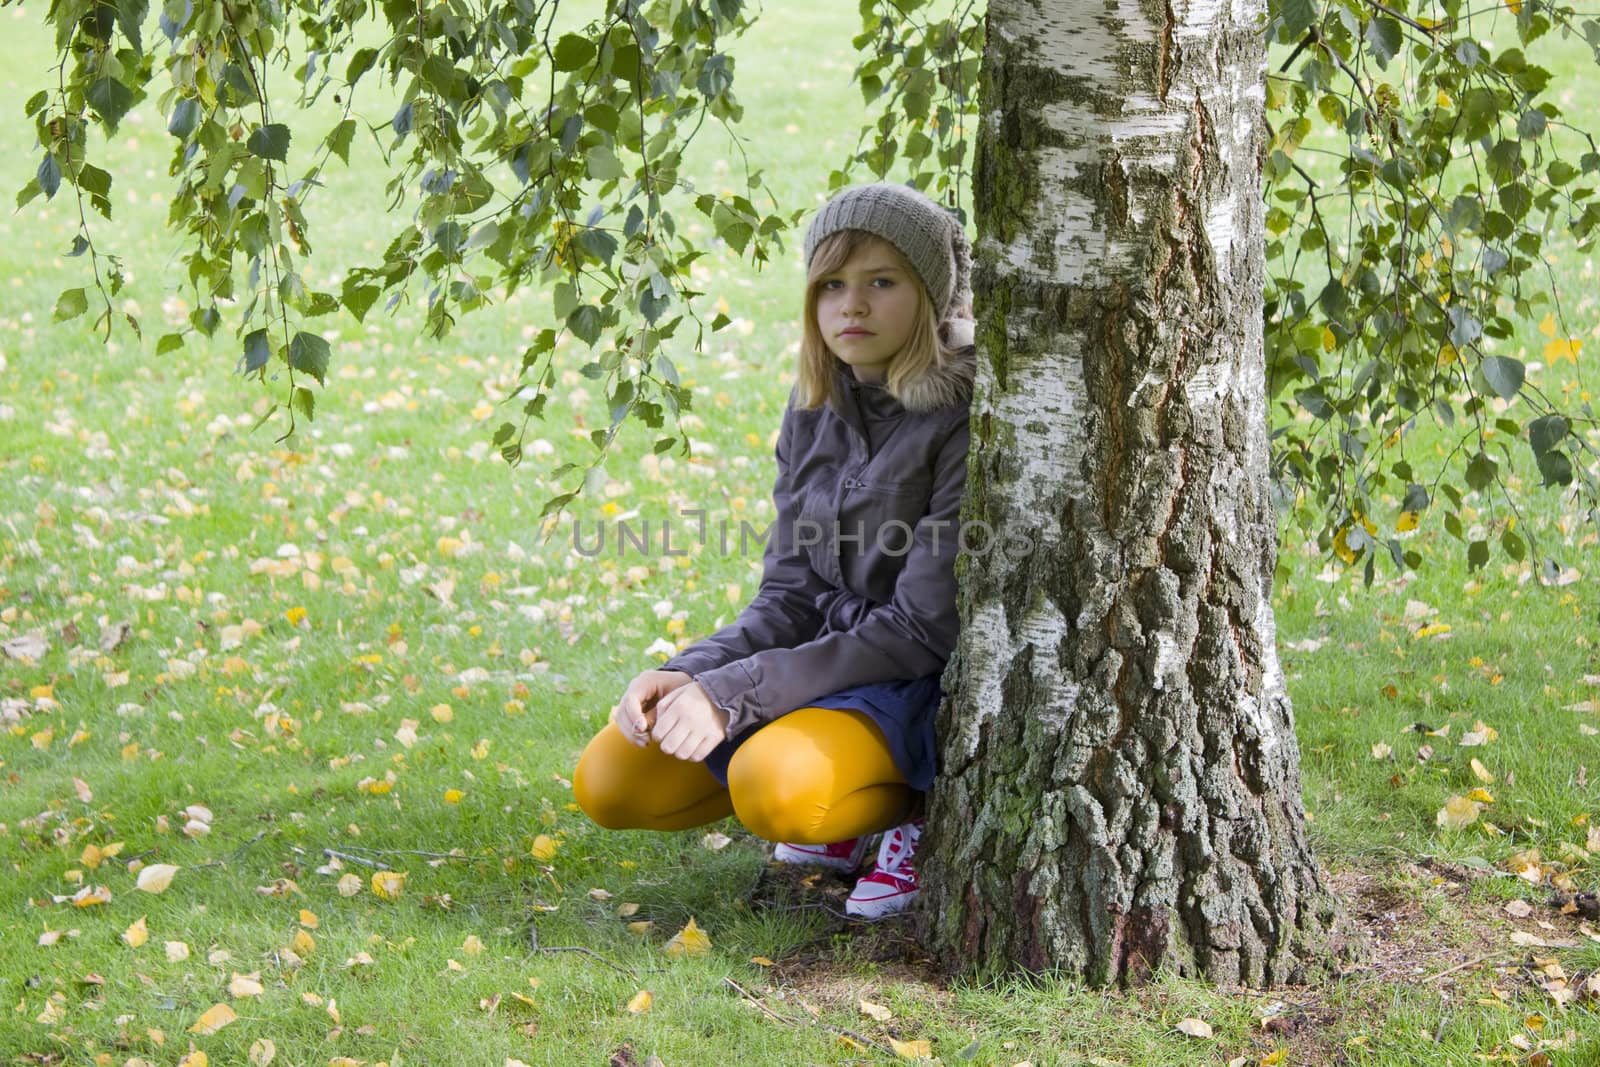 Cute girl in autumn park